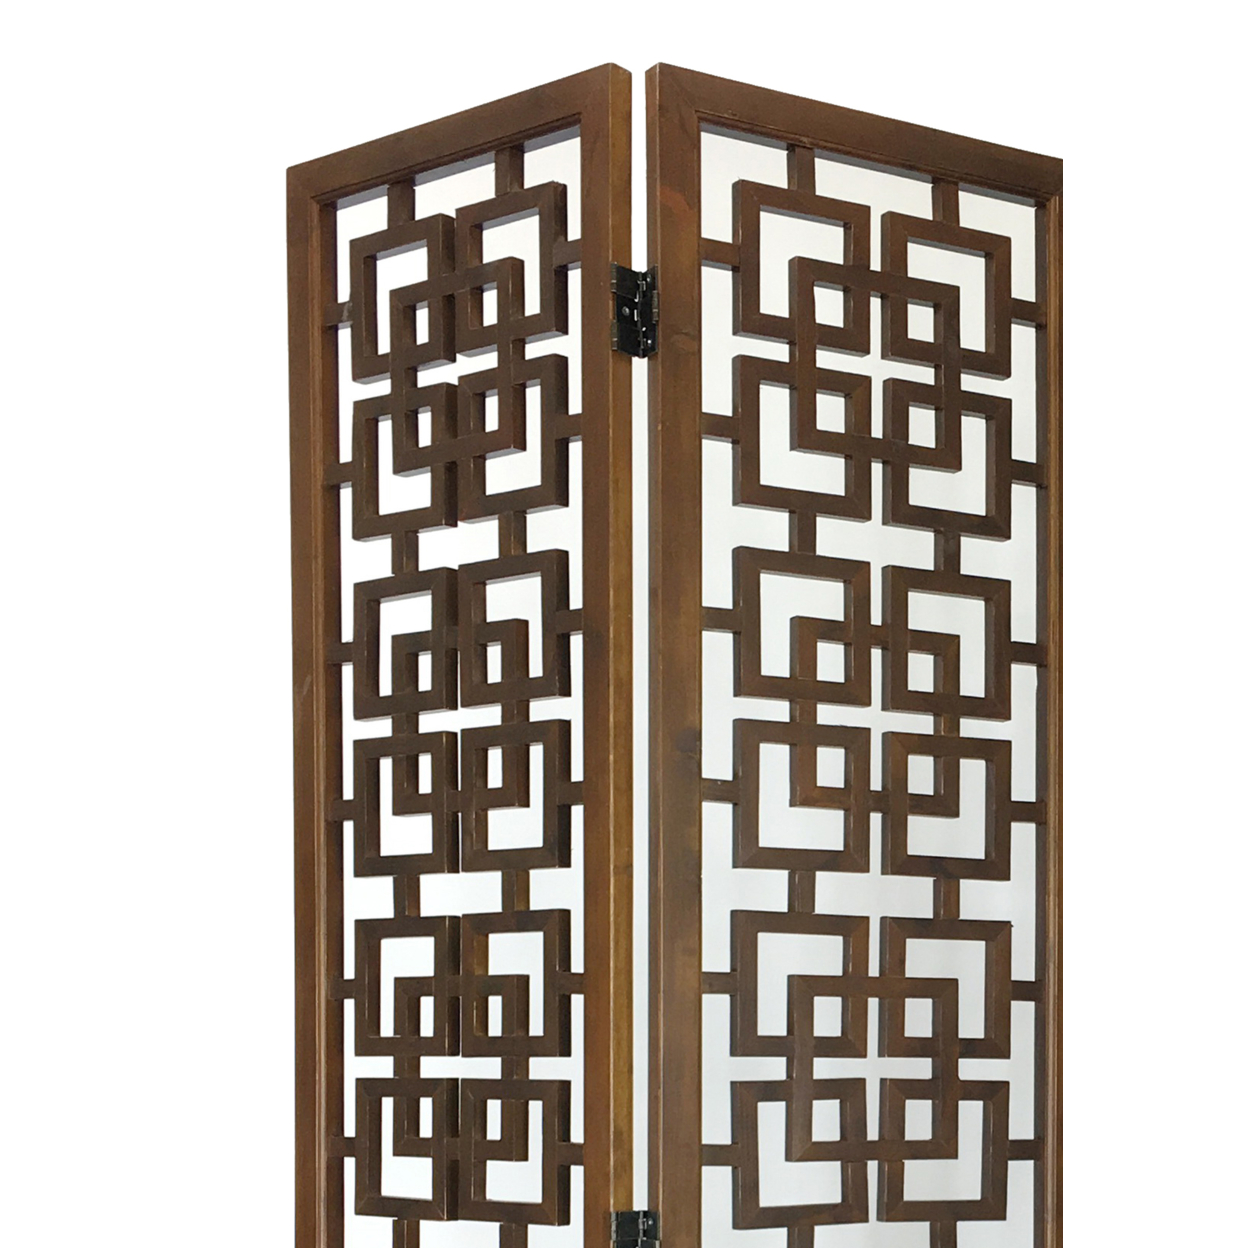 Wooden 3 Panel Screen With Interlocking Square Design, Brown- Saltoro Sherpi